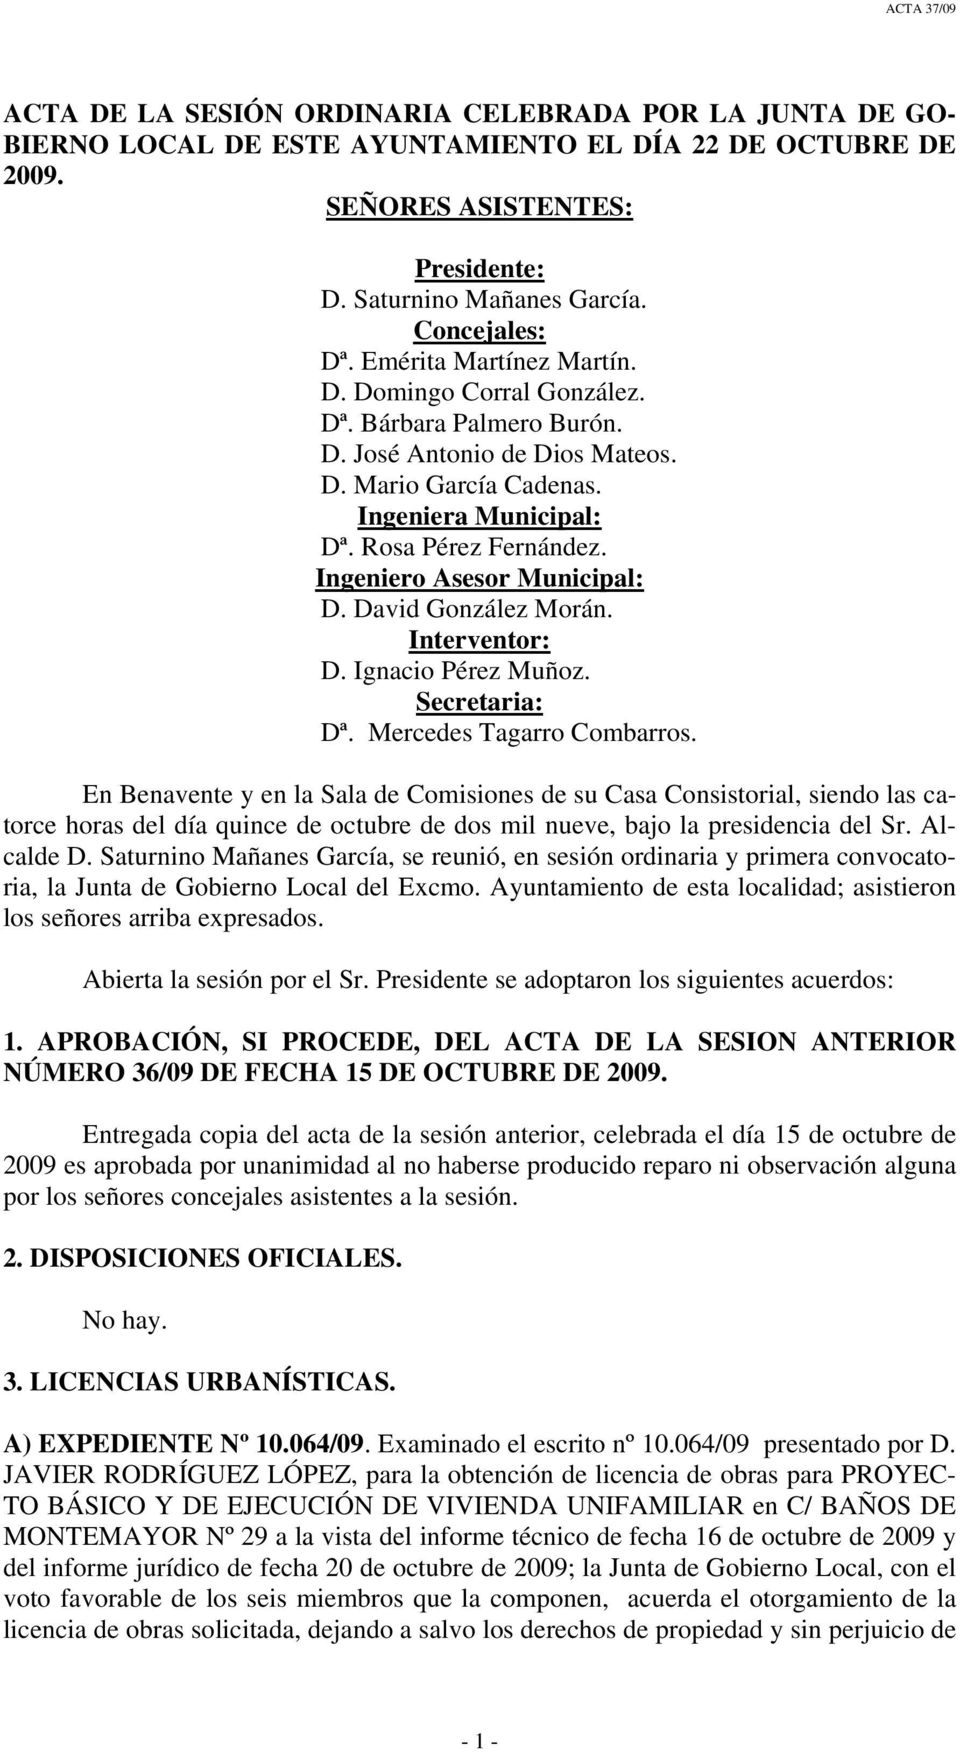 Ingeniero Asesor Municipal: D. David González Morán. Interventor: D. Ignacio Pérez Muñoz. Secretaria: Dª. Mercedes Tagarro Combarros.